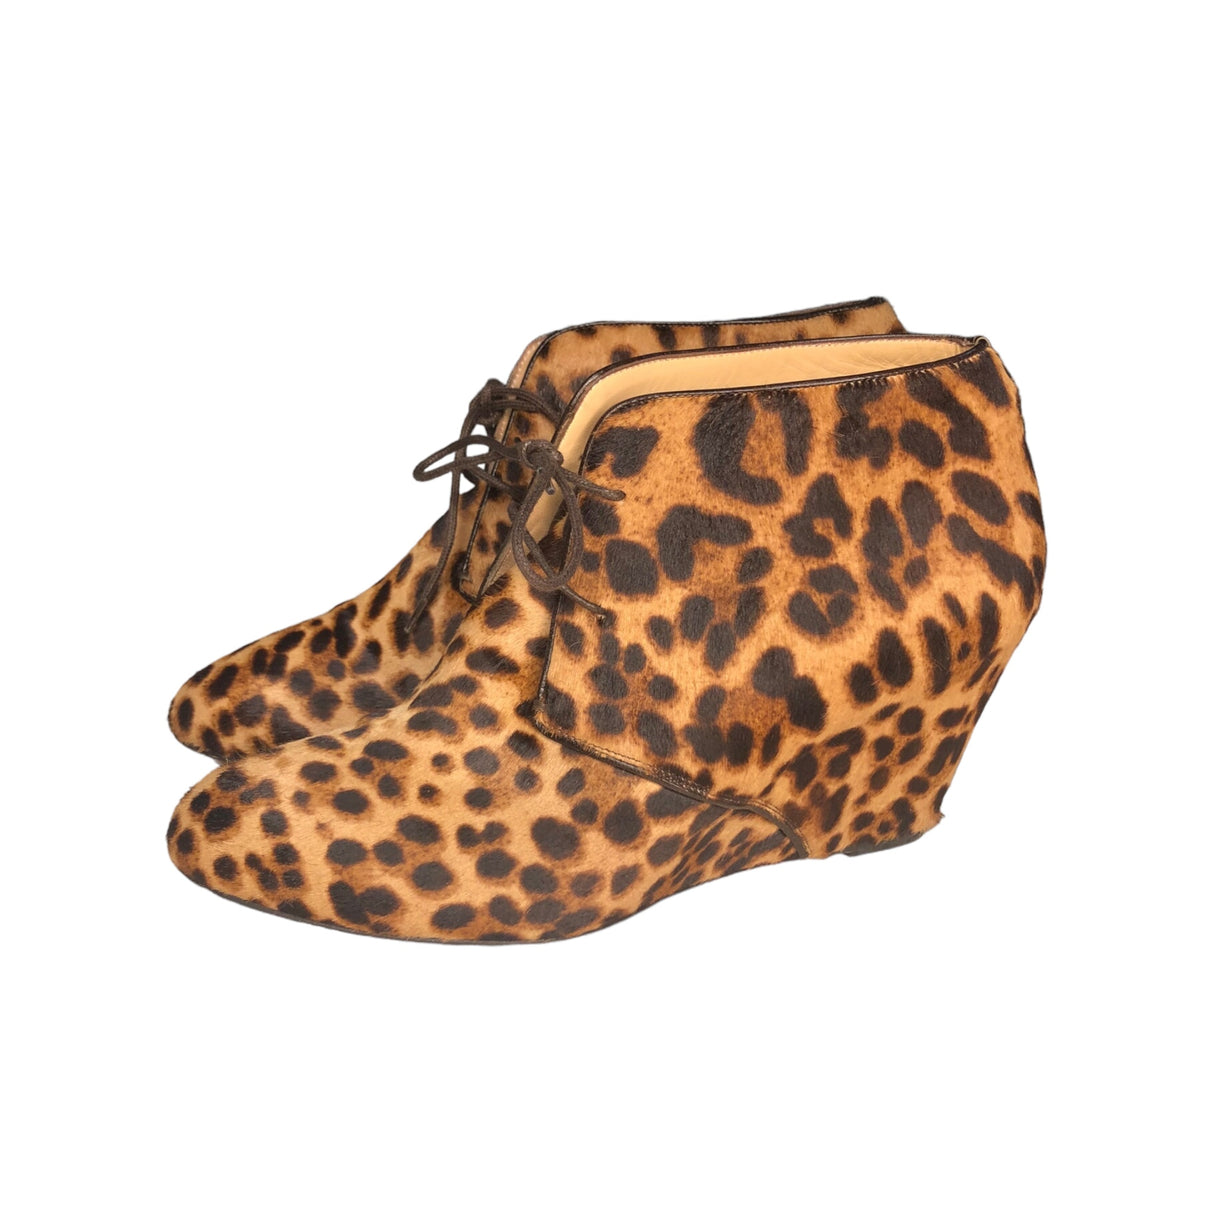 A second chance - Christian Louboutin Leopard Calf Hair Rock Boot - Lebanon